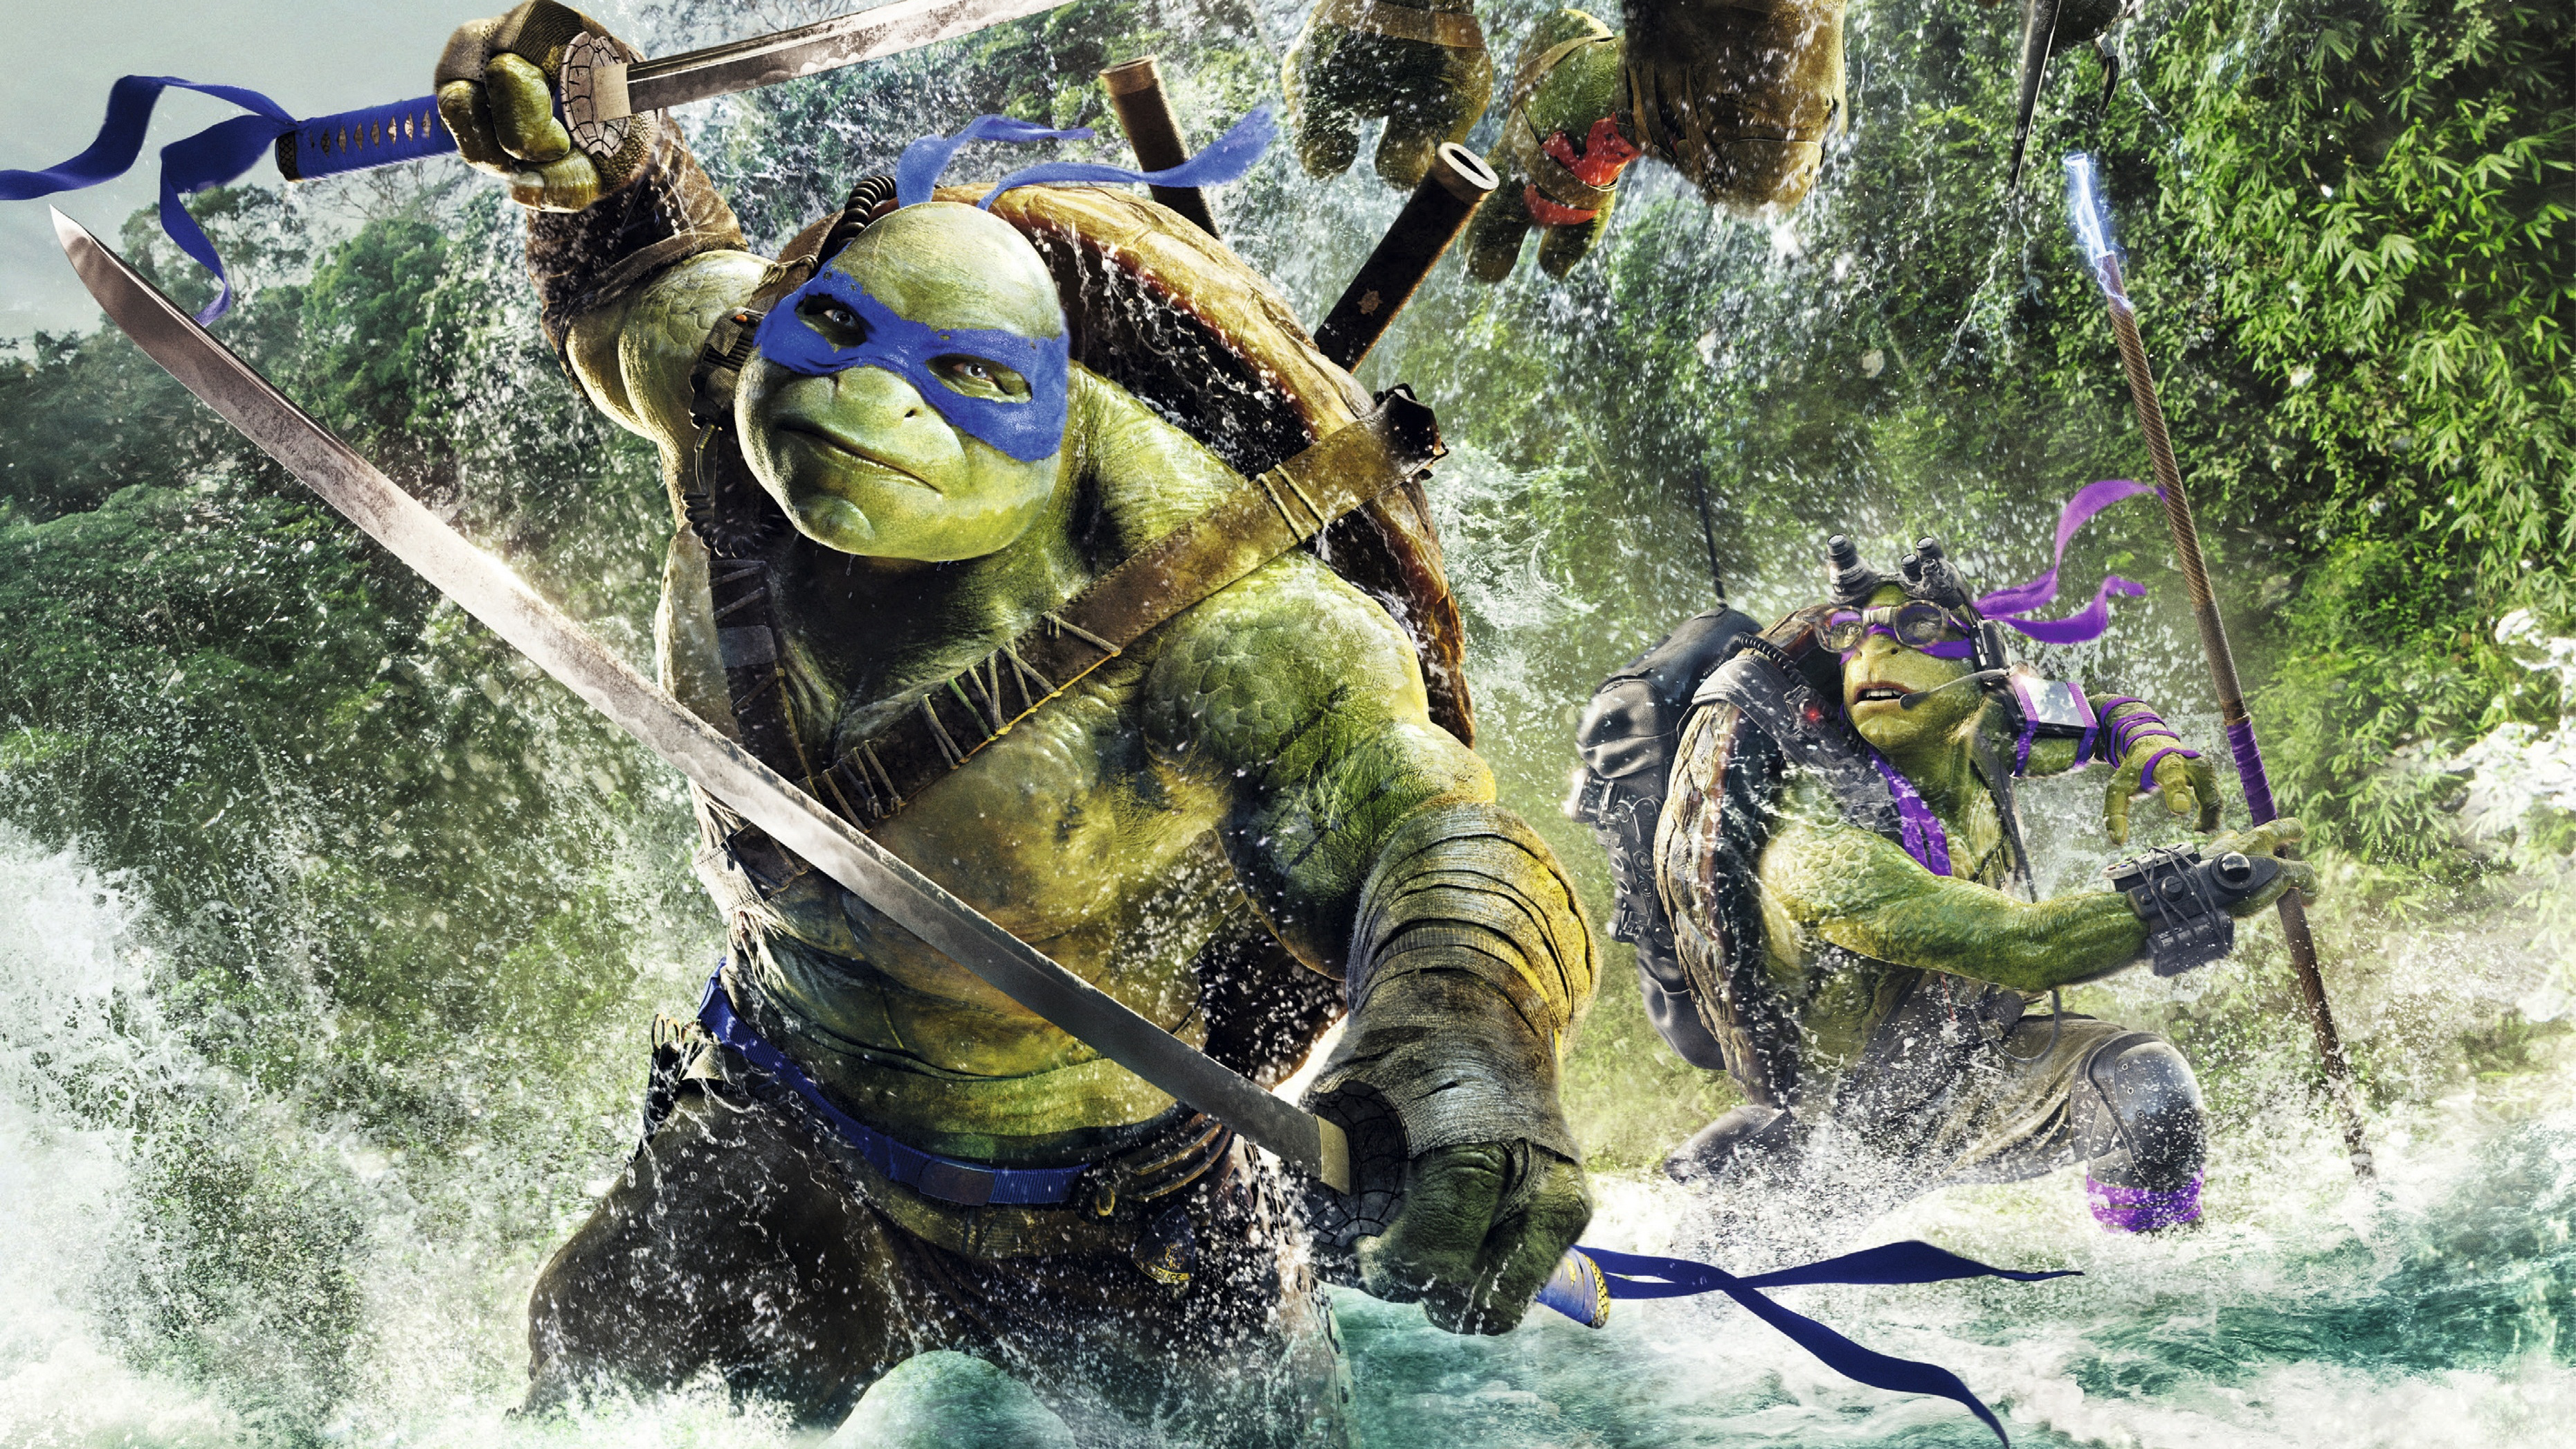 https://images.hdqwalls.com/wallpapers/teenage-mutant-ninja-turtles-4k-9s.jpg